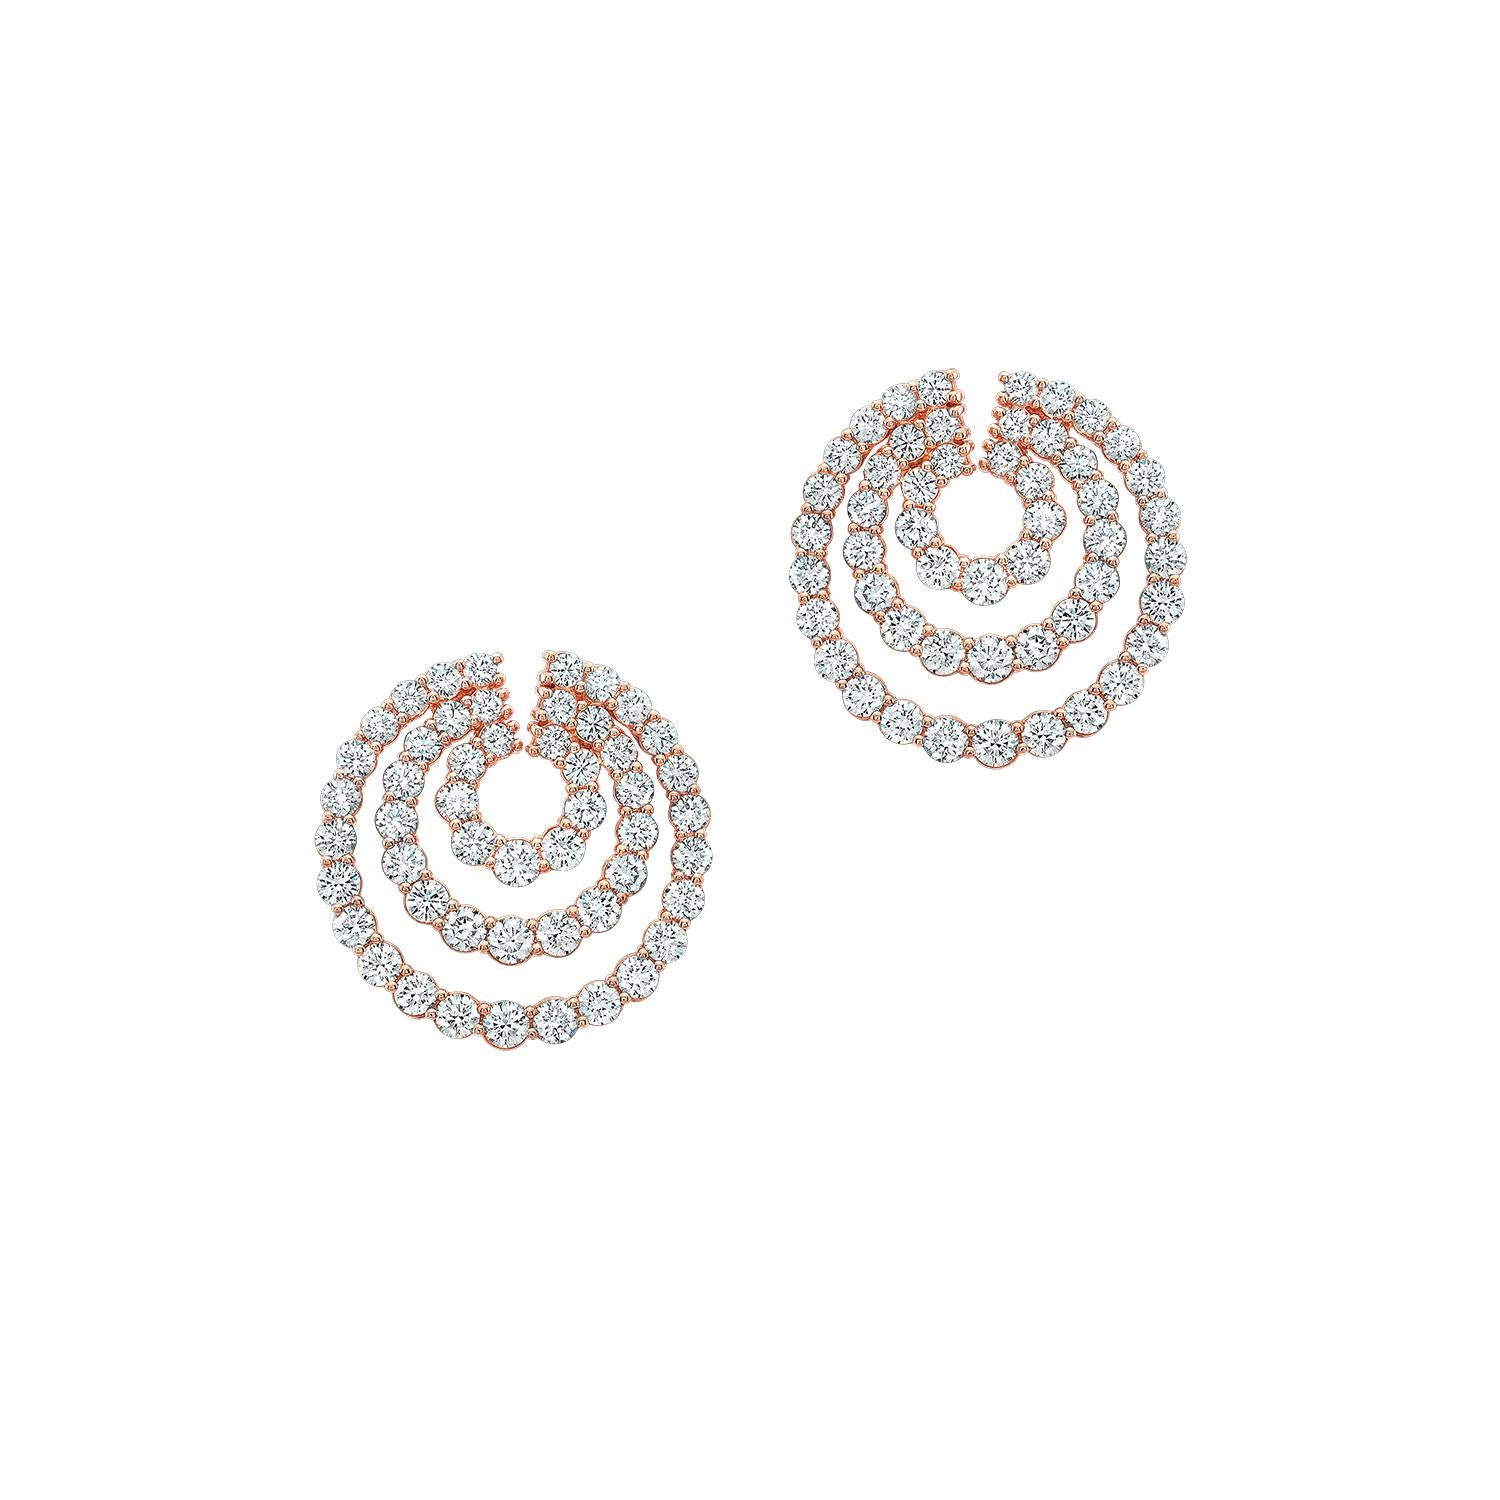 1 ct diamond earrings